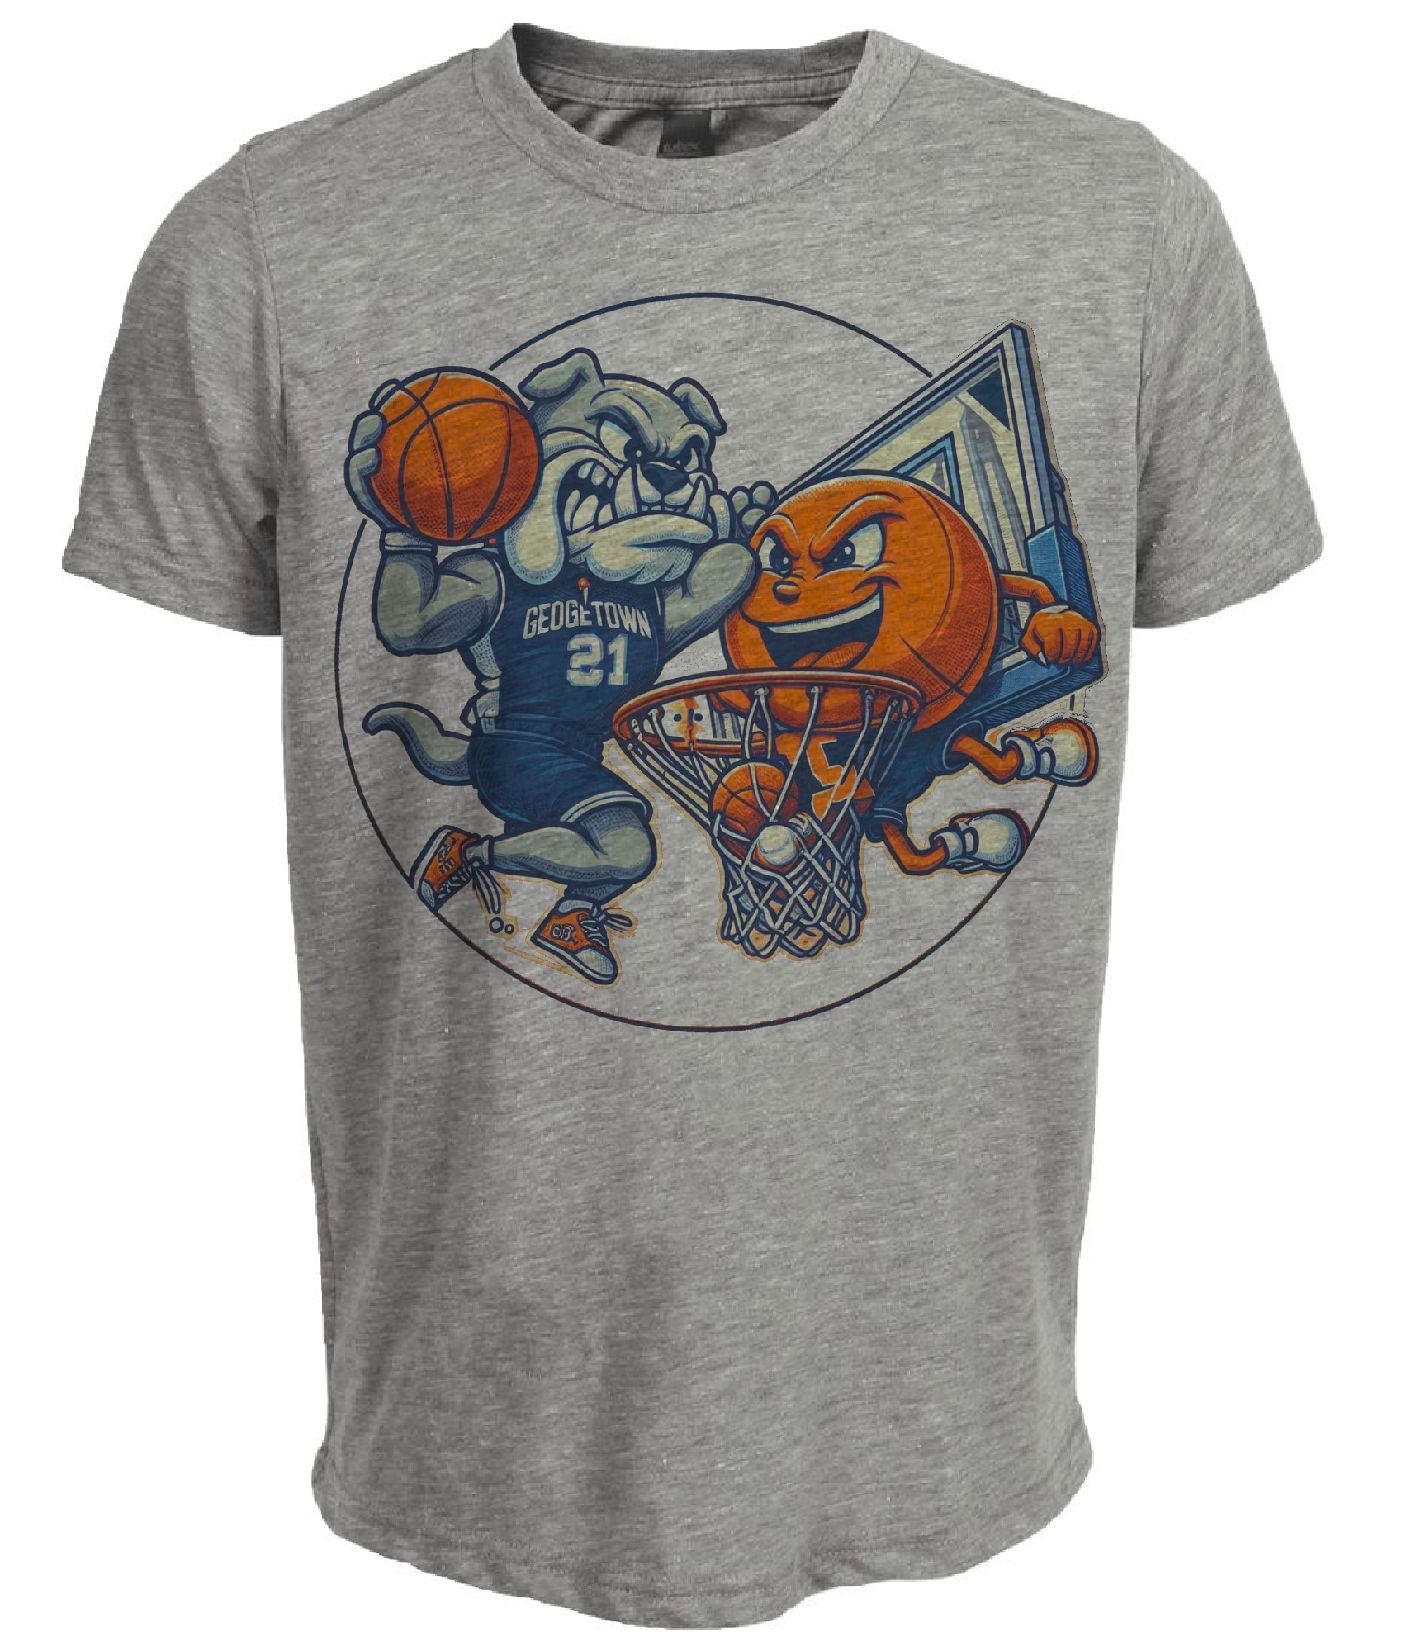 Georgetown Hoyas vs. Syracuse Orange Retro Rivalry Basketball 1989 Artwork Heather Gray Sublimated T-Shirt